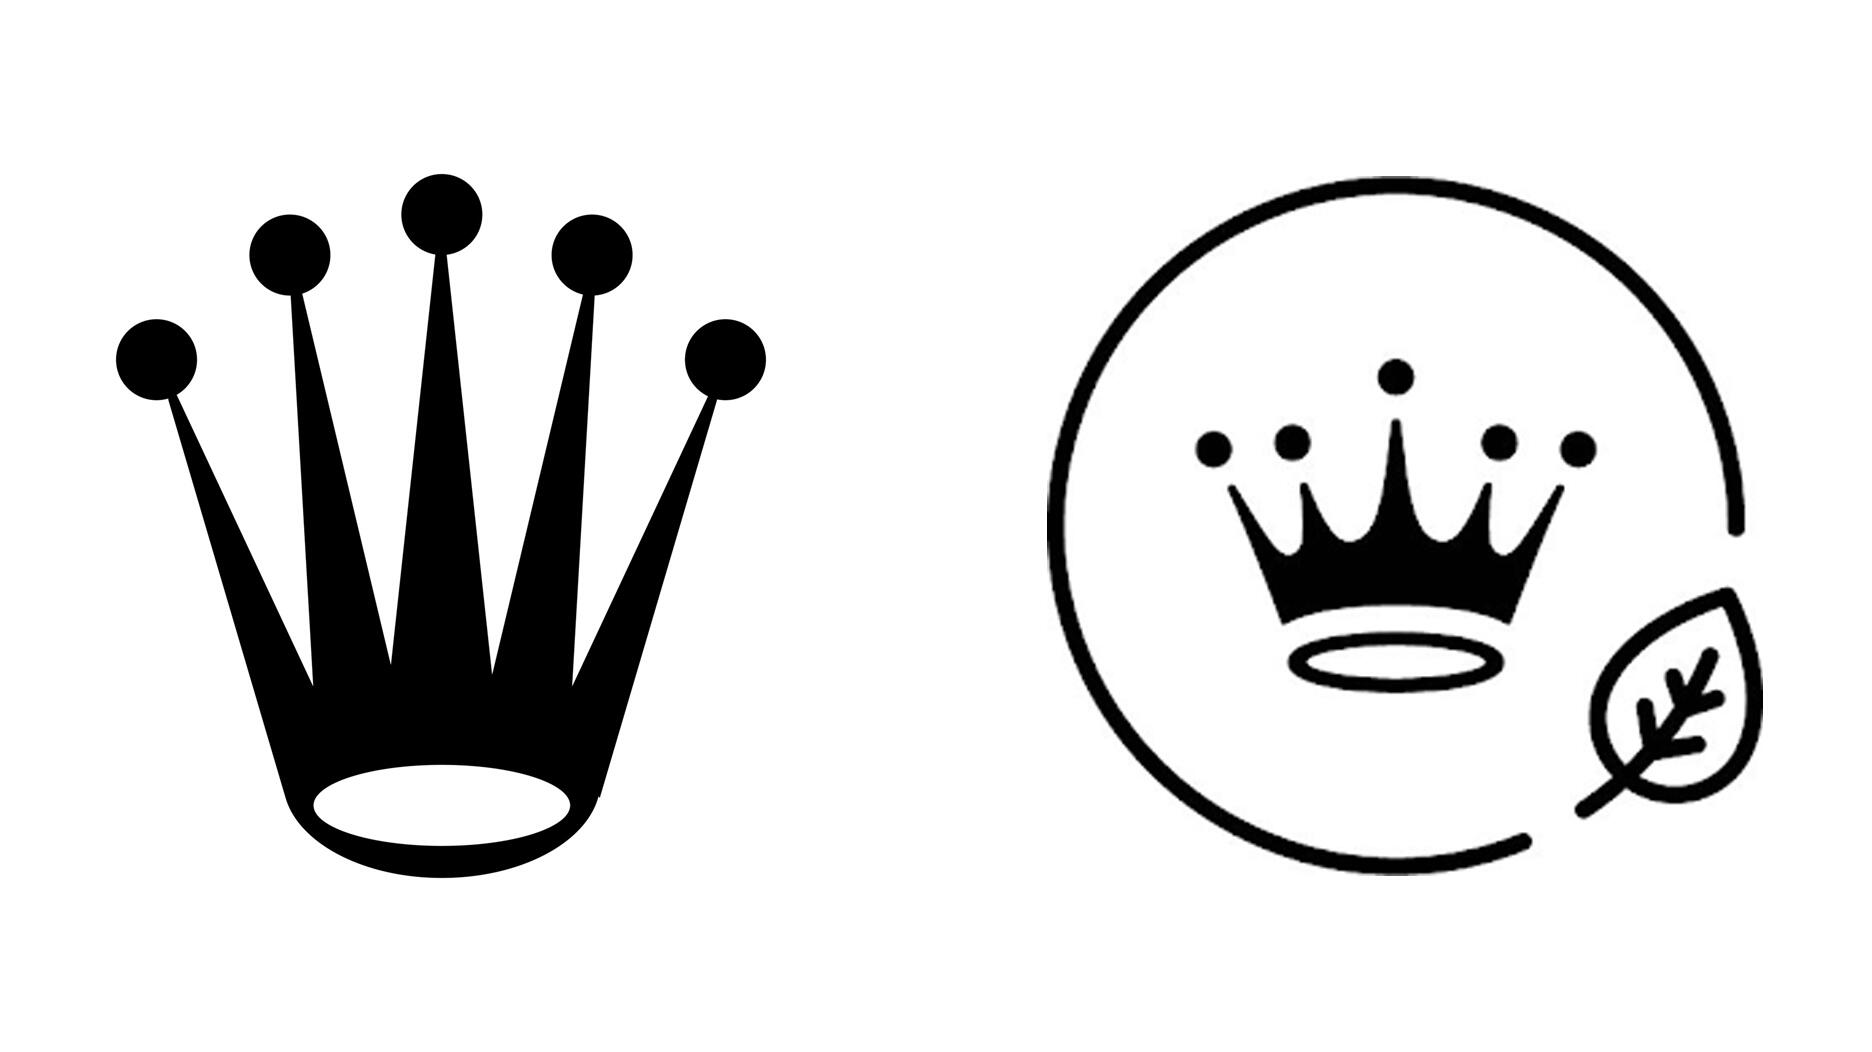 Rolex and Hallmark logos